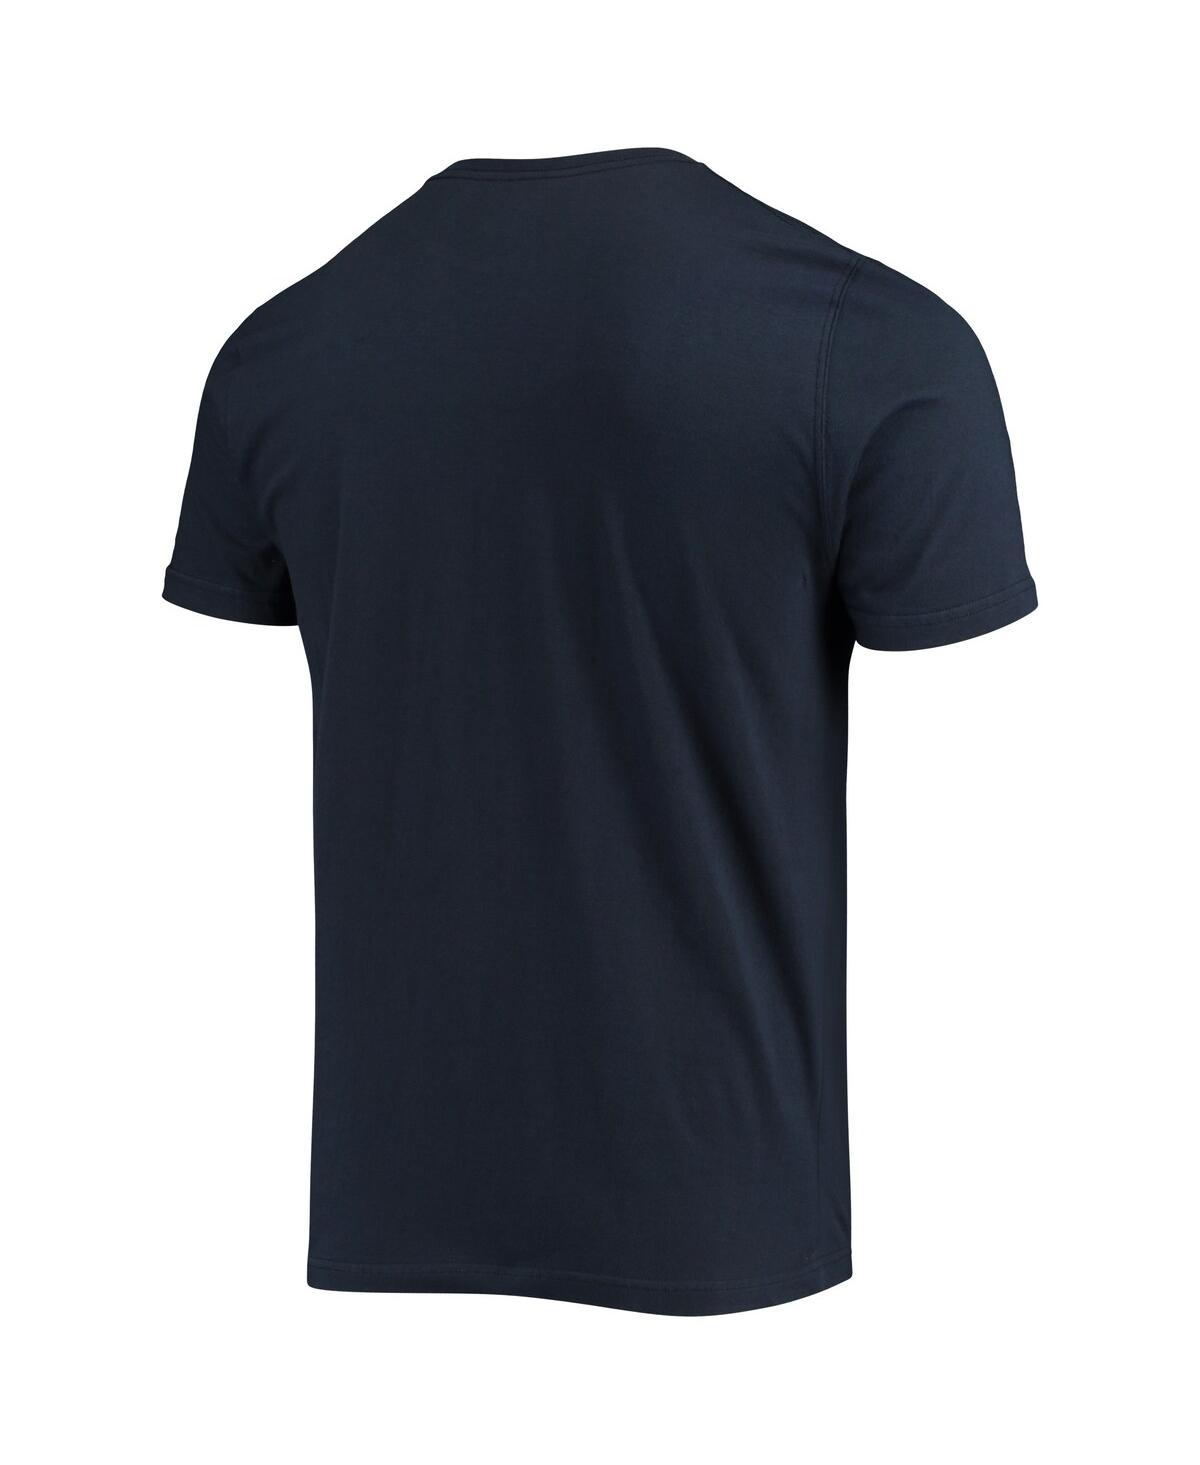 Shop New Era Men's  College Navy Seattle Seahawks Local Pack T-shirt